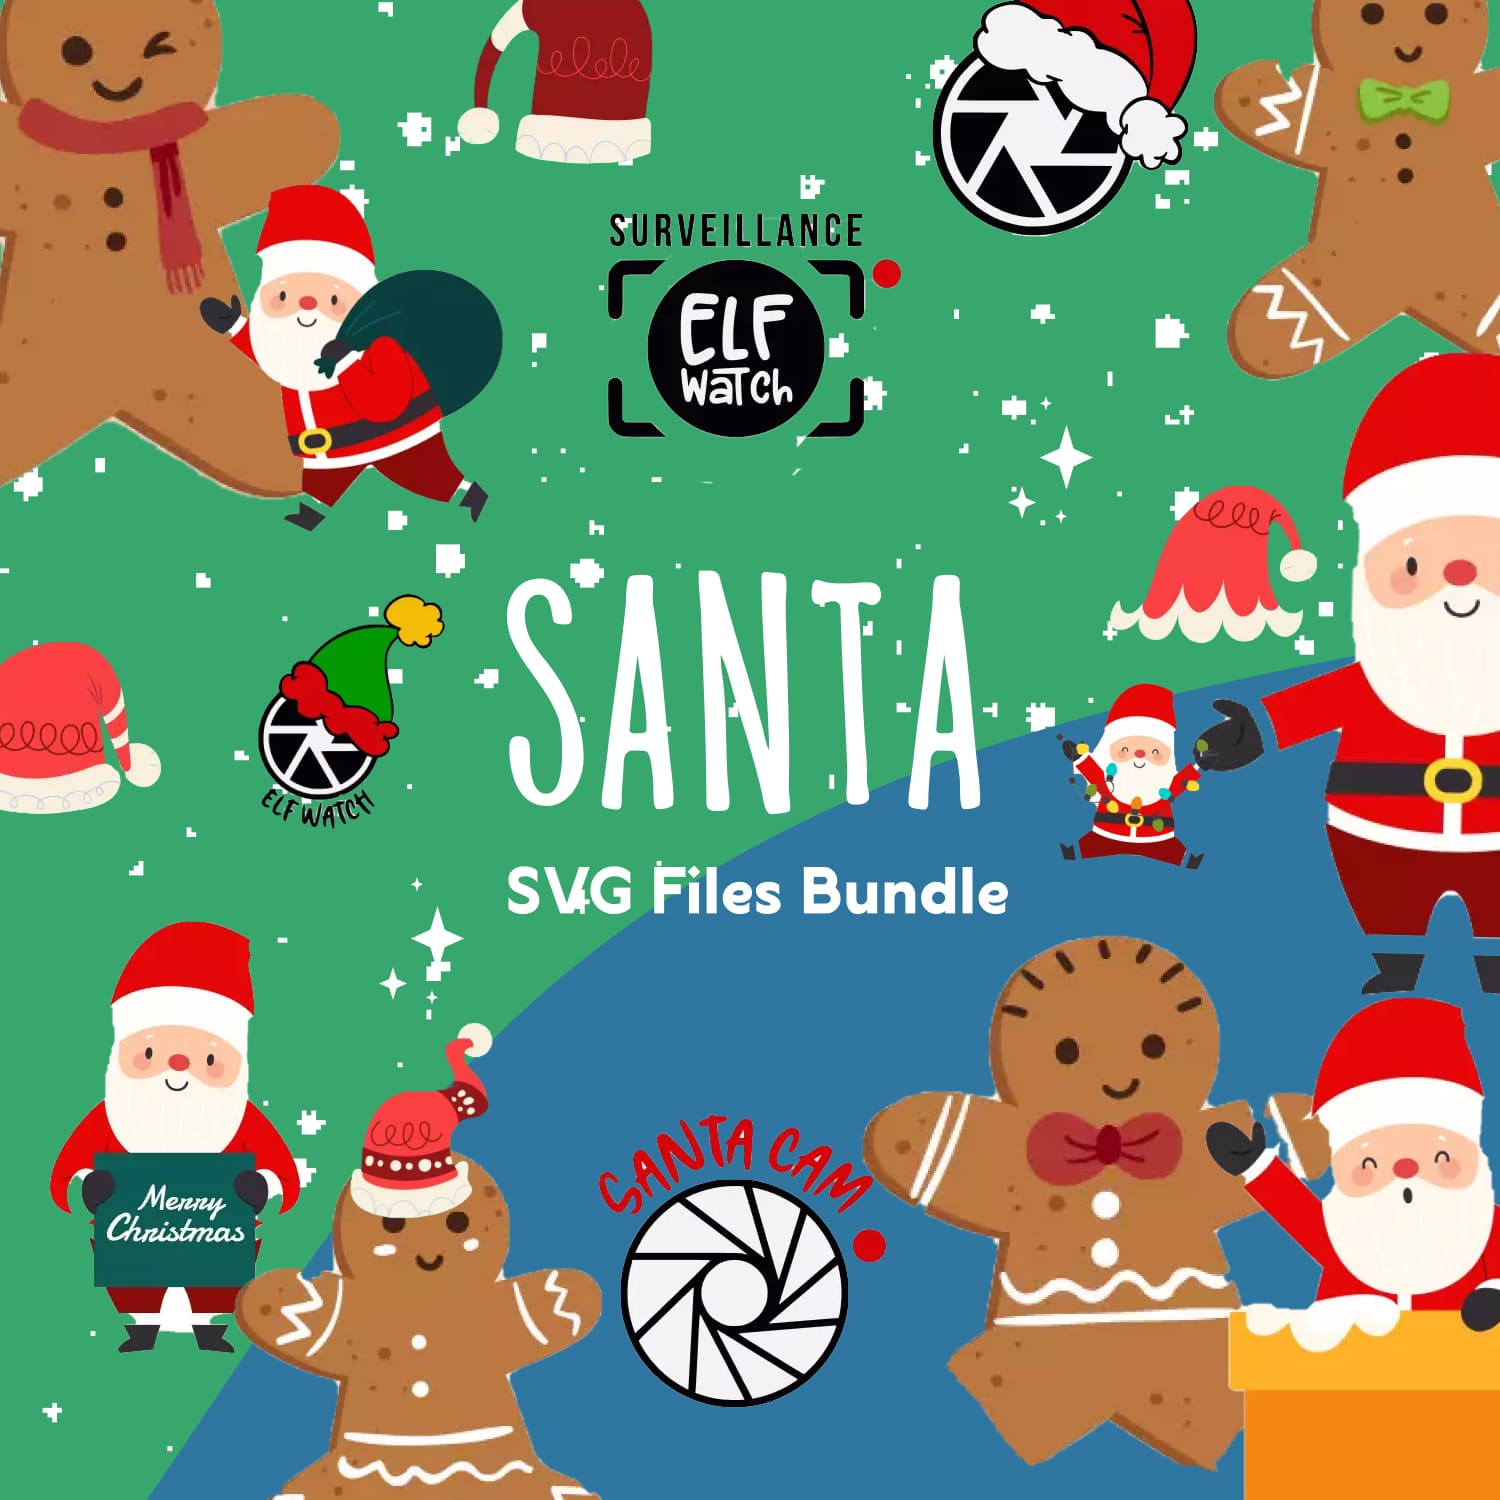 Santa SVG files bundle, first picture 1500x1500.